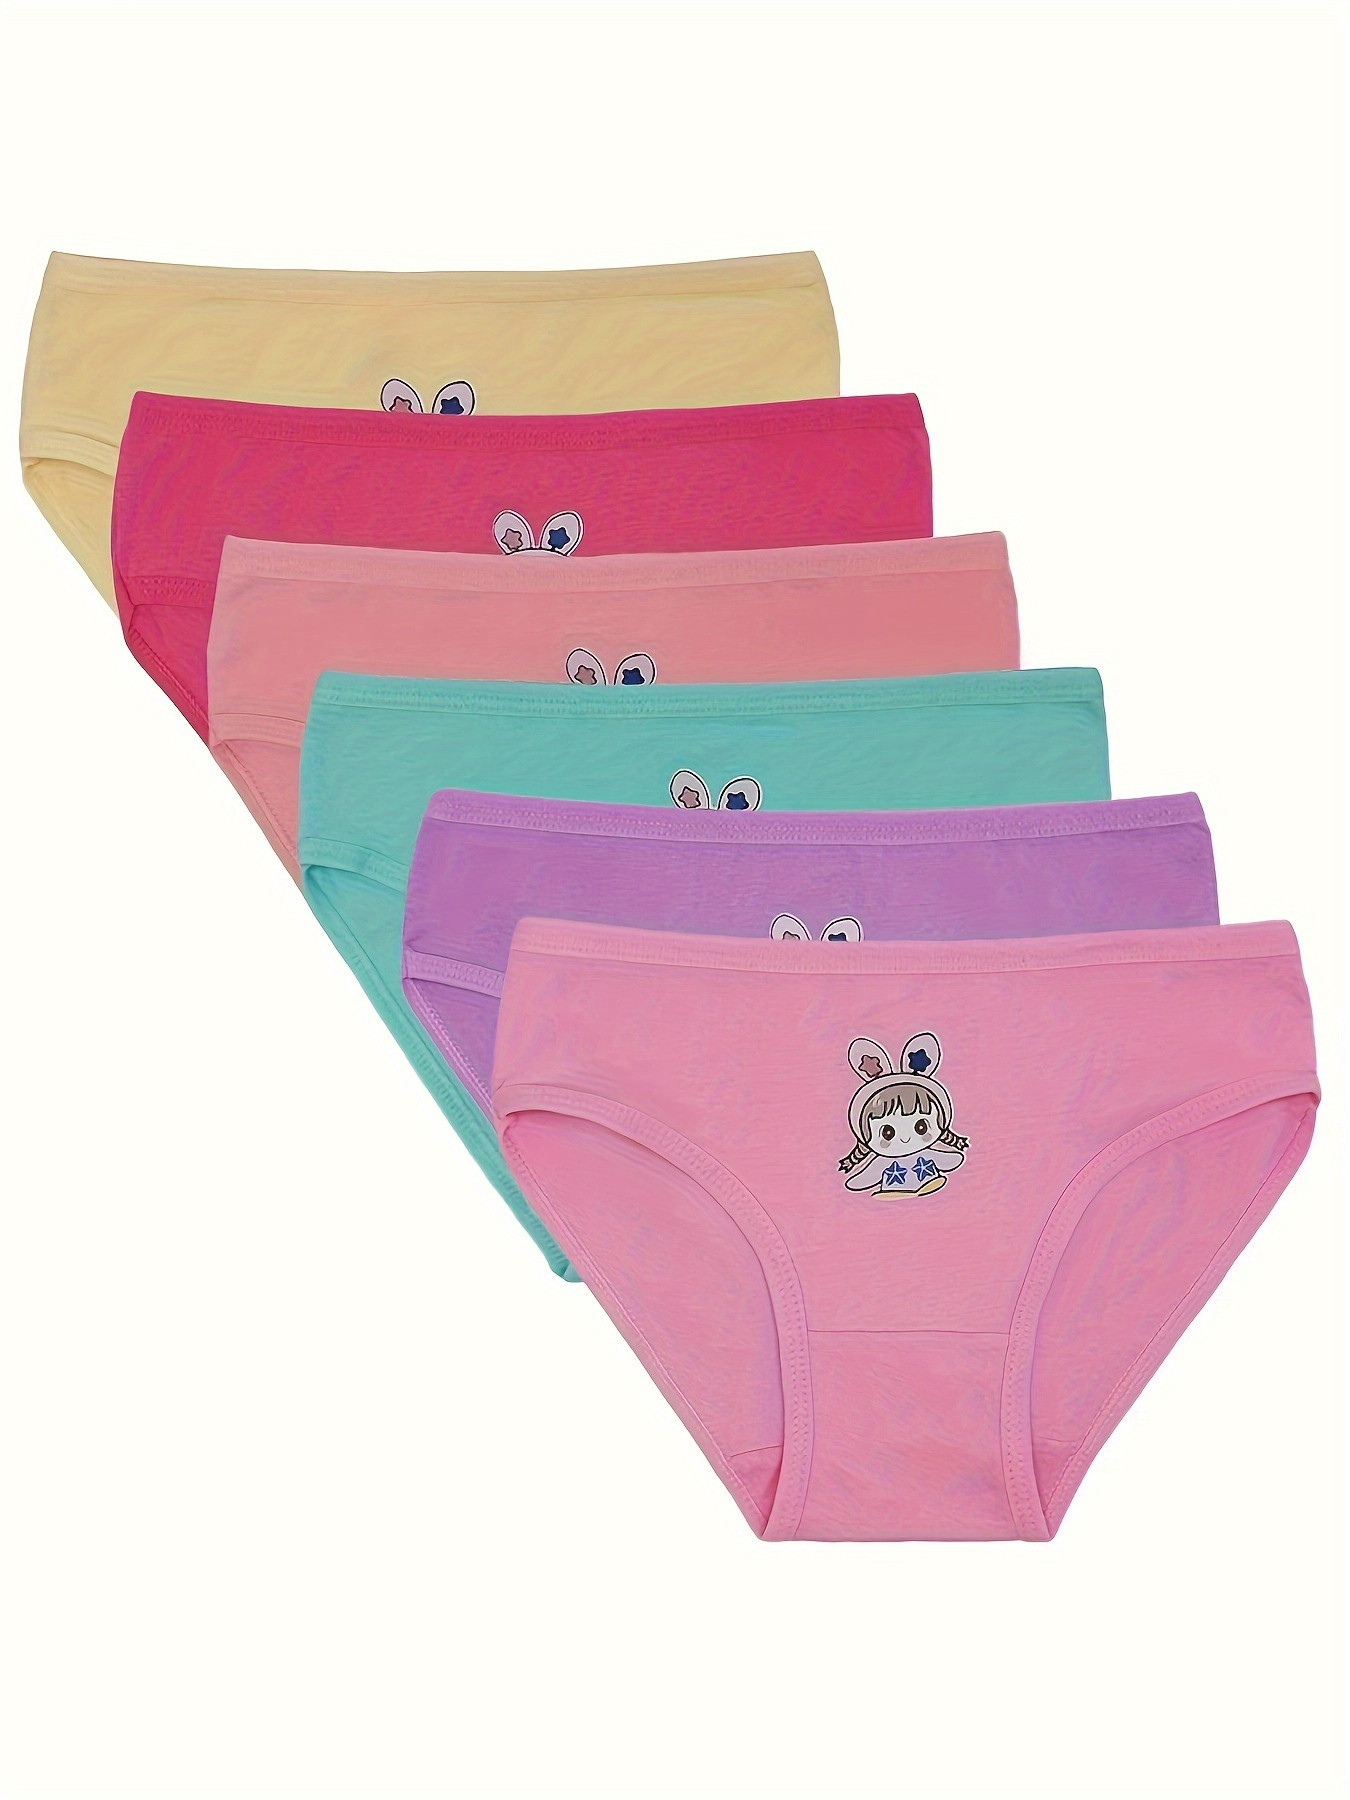 Kids Toddler Baby Girls Boys Underpants Cute Cartoon Print Underwear Shorts  Cotton Briefs Trunks 4PCS Underwear Girls 7 8 Girls Size 10 Clothes 